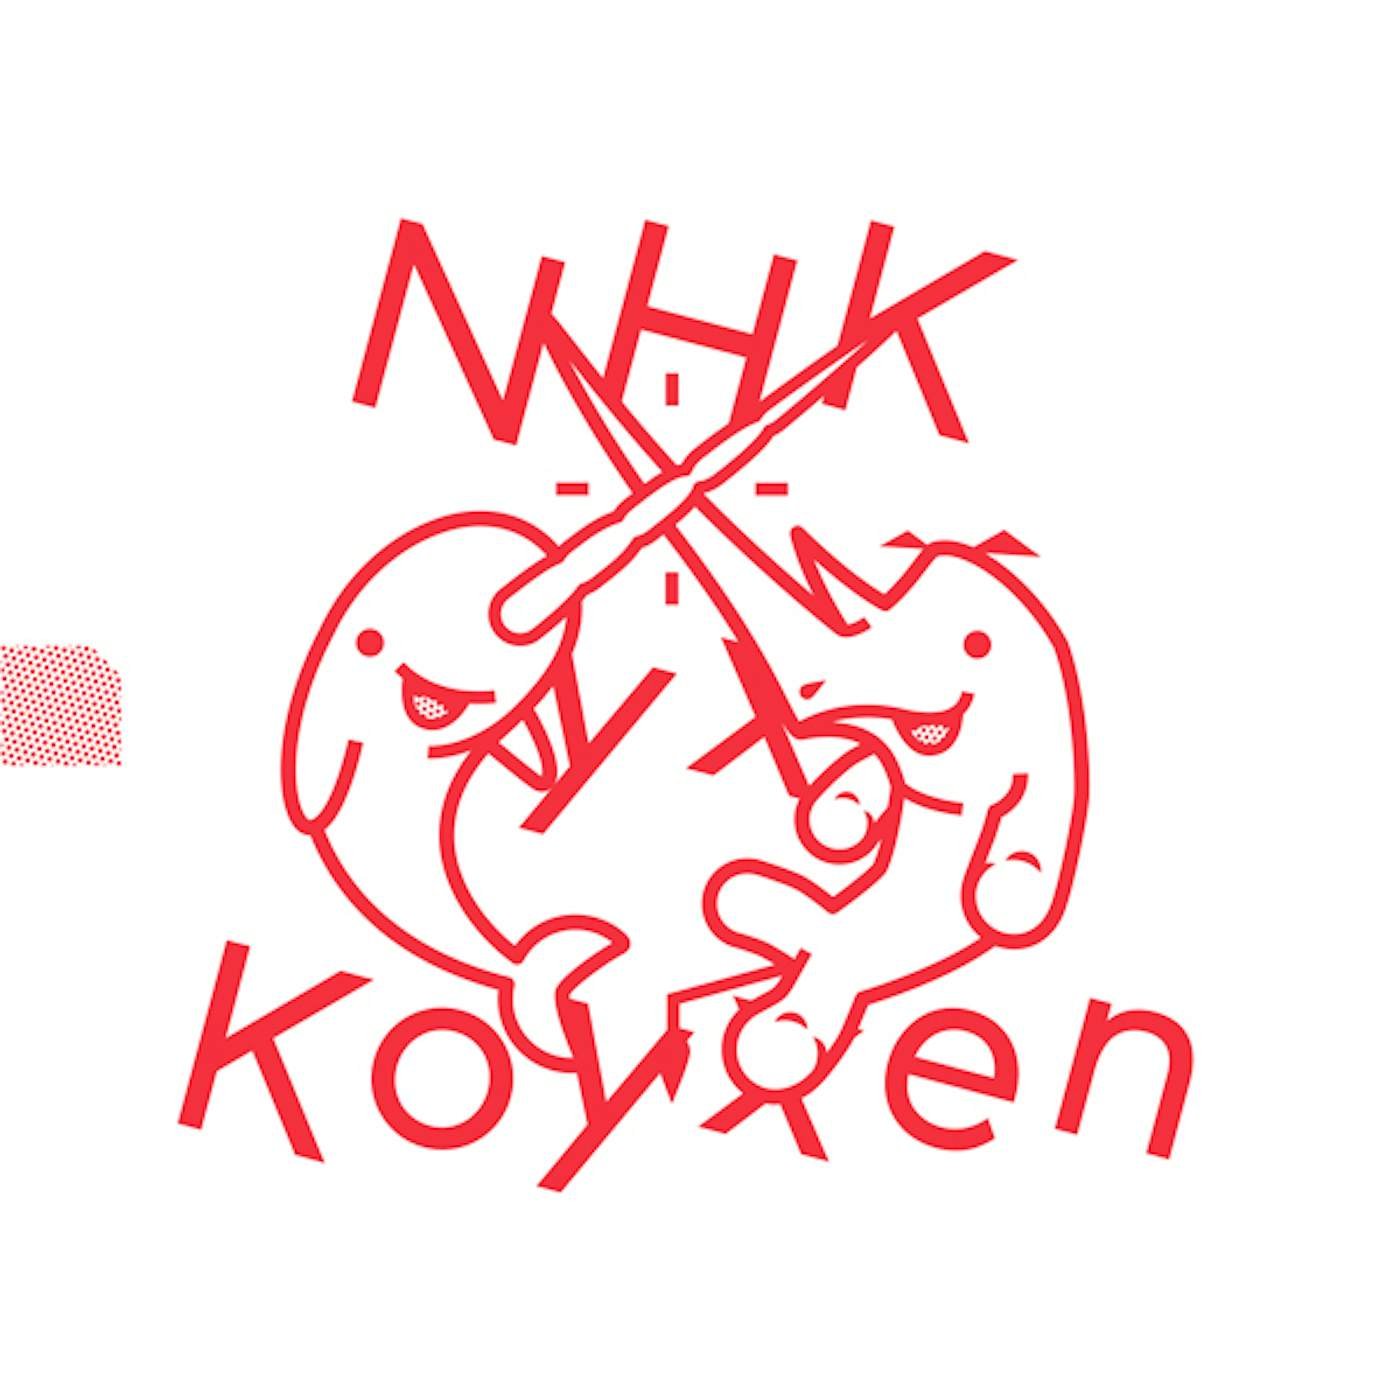 NHK yx Koyxen DOOM STEPPY REVERB CD